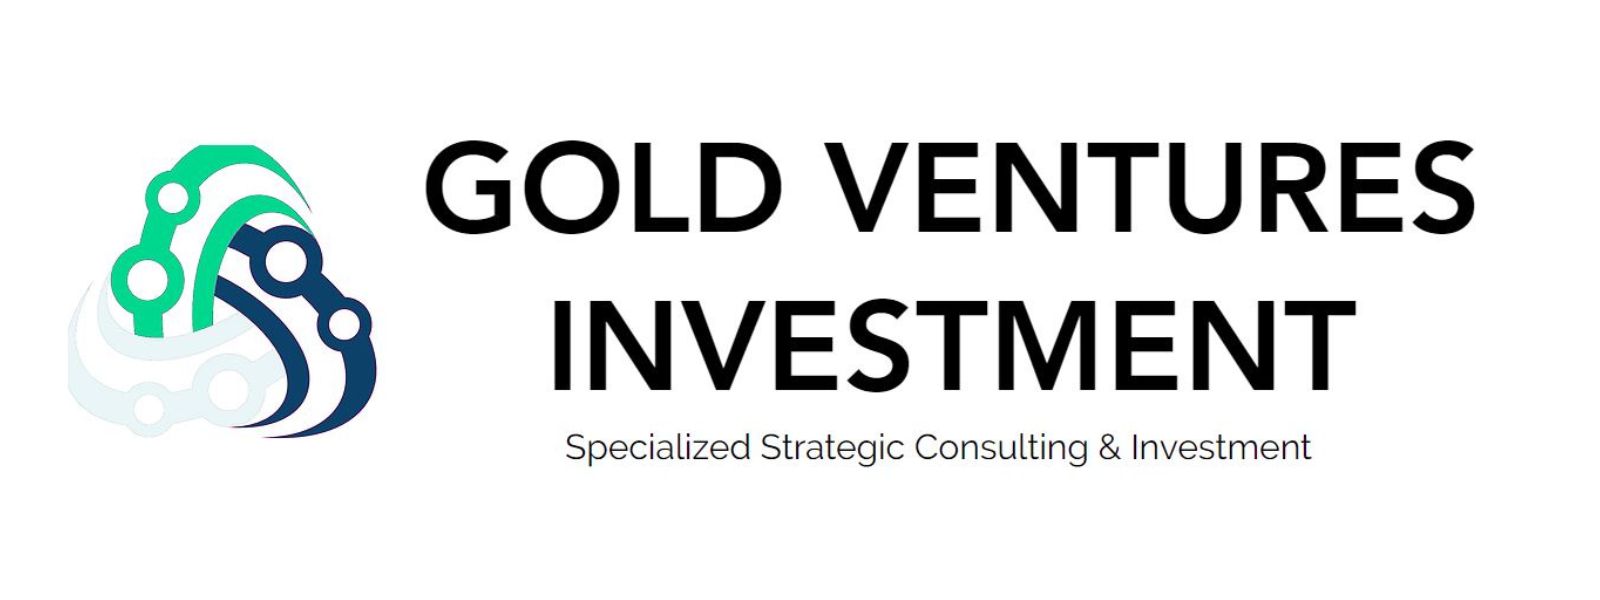 Gold ventures investment logo